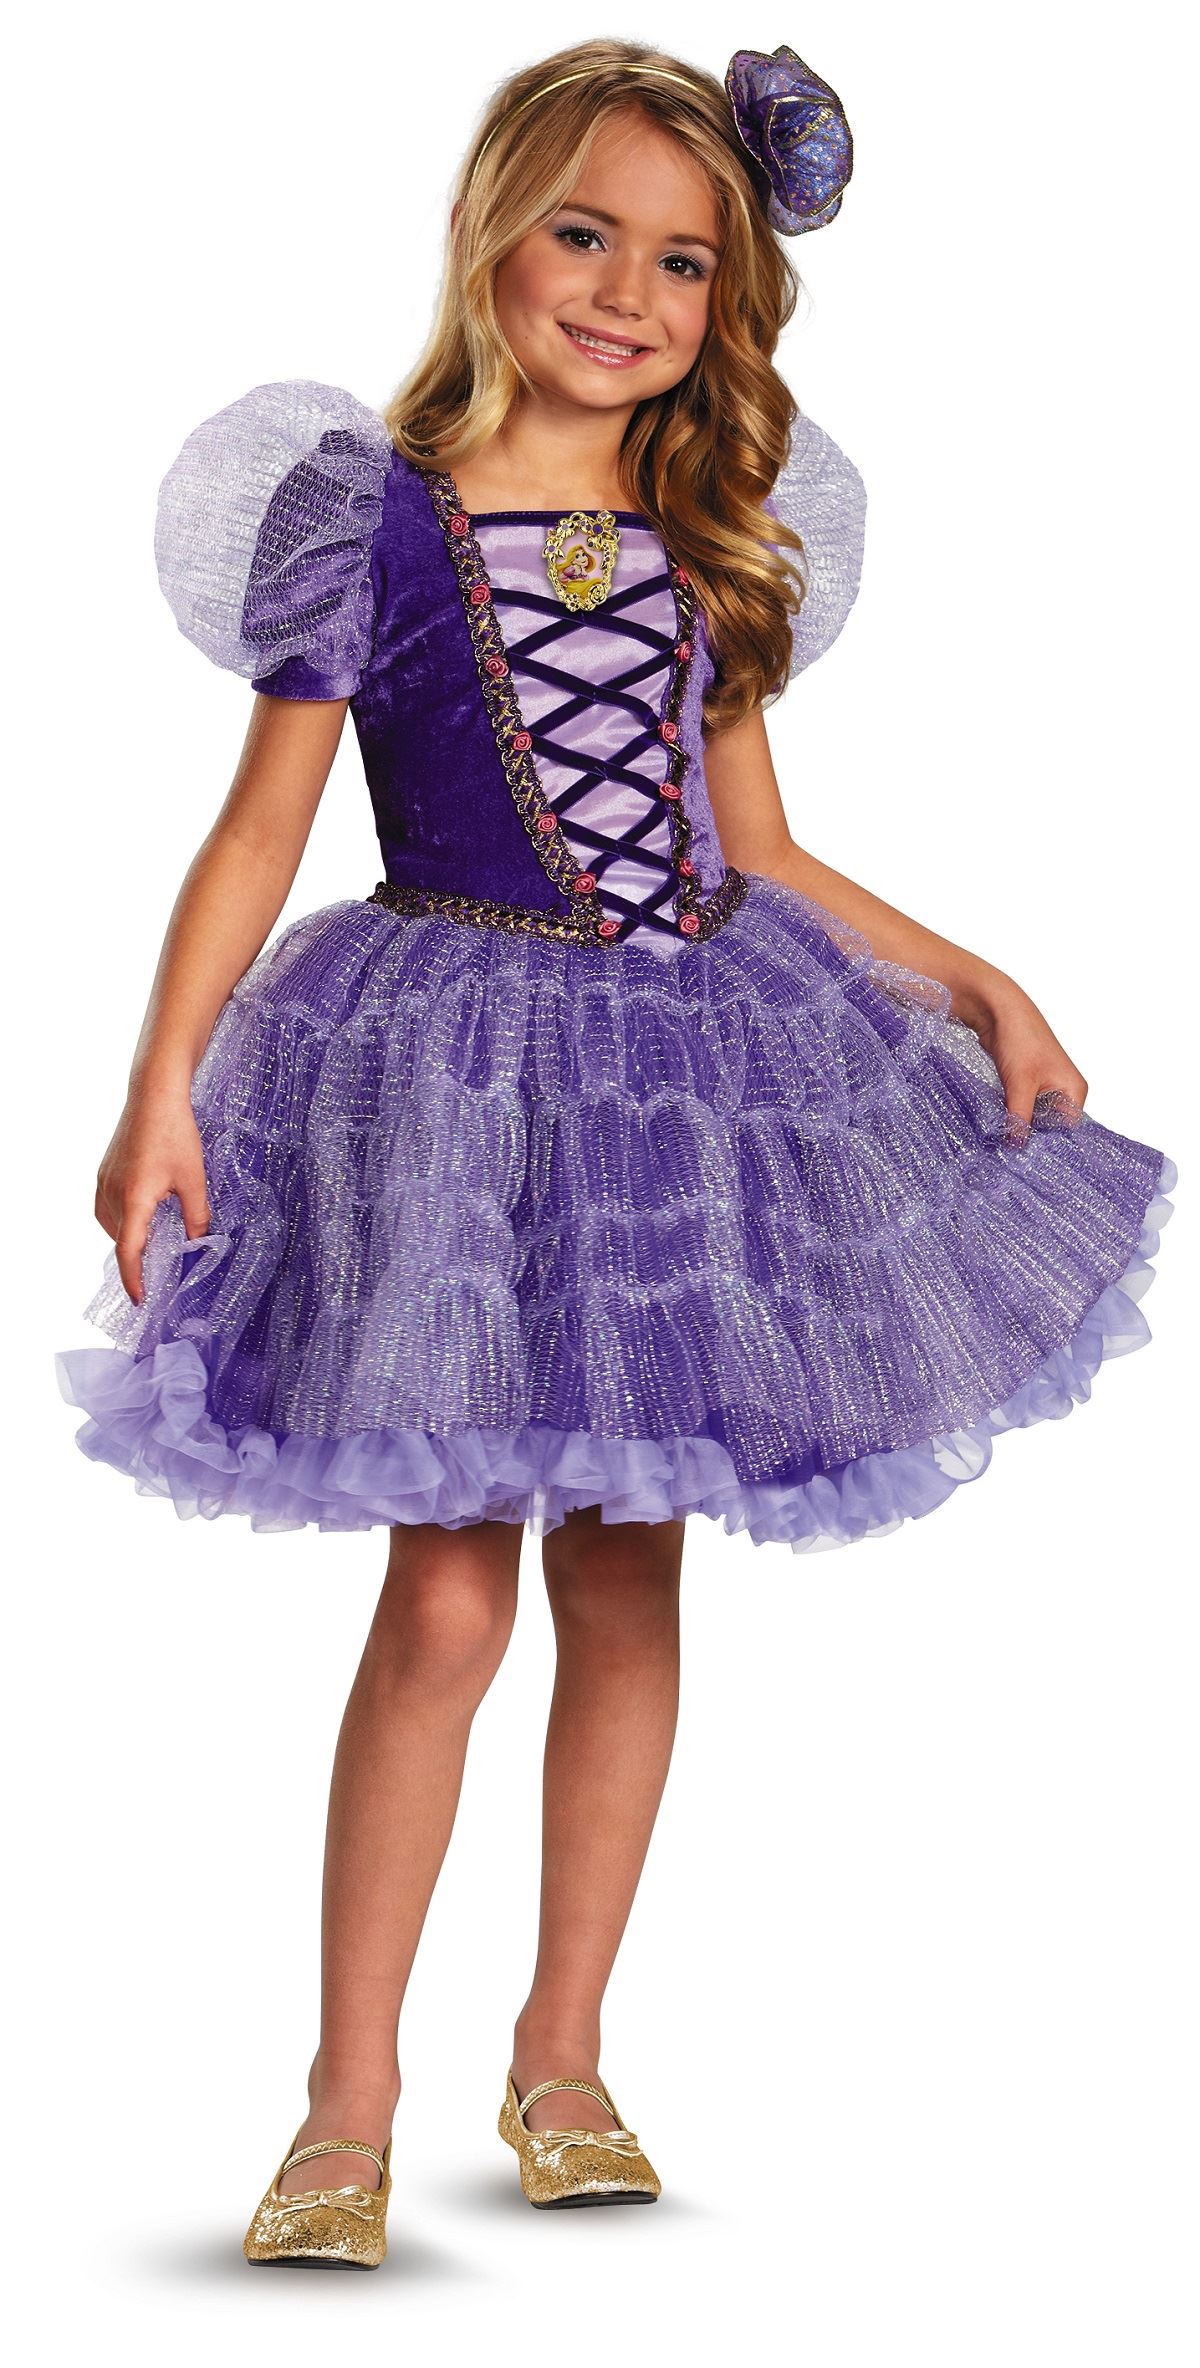 Kids Rapunzel Girls Disney Princess Costume  $59.99  The Costume Land